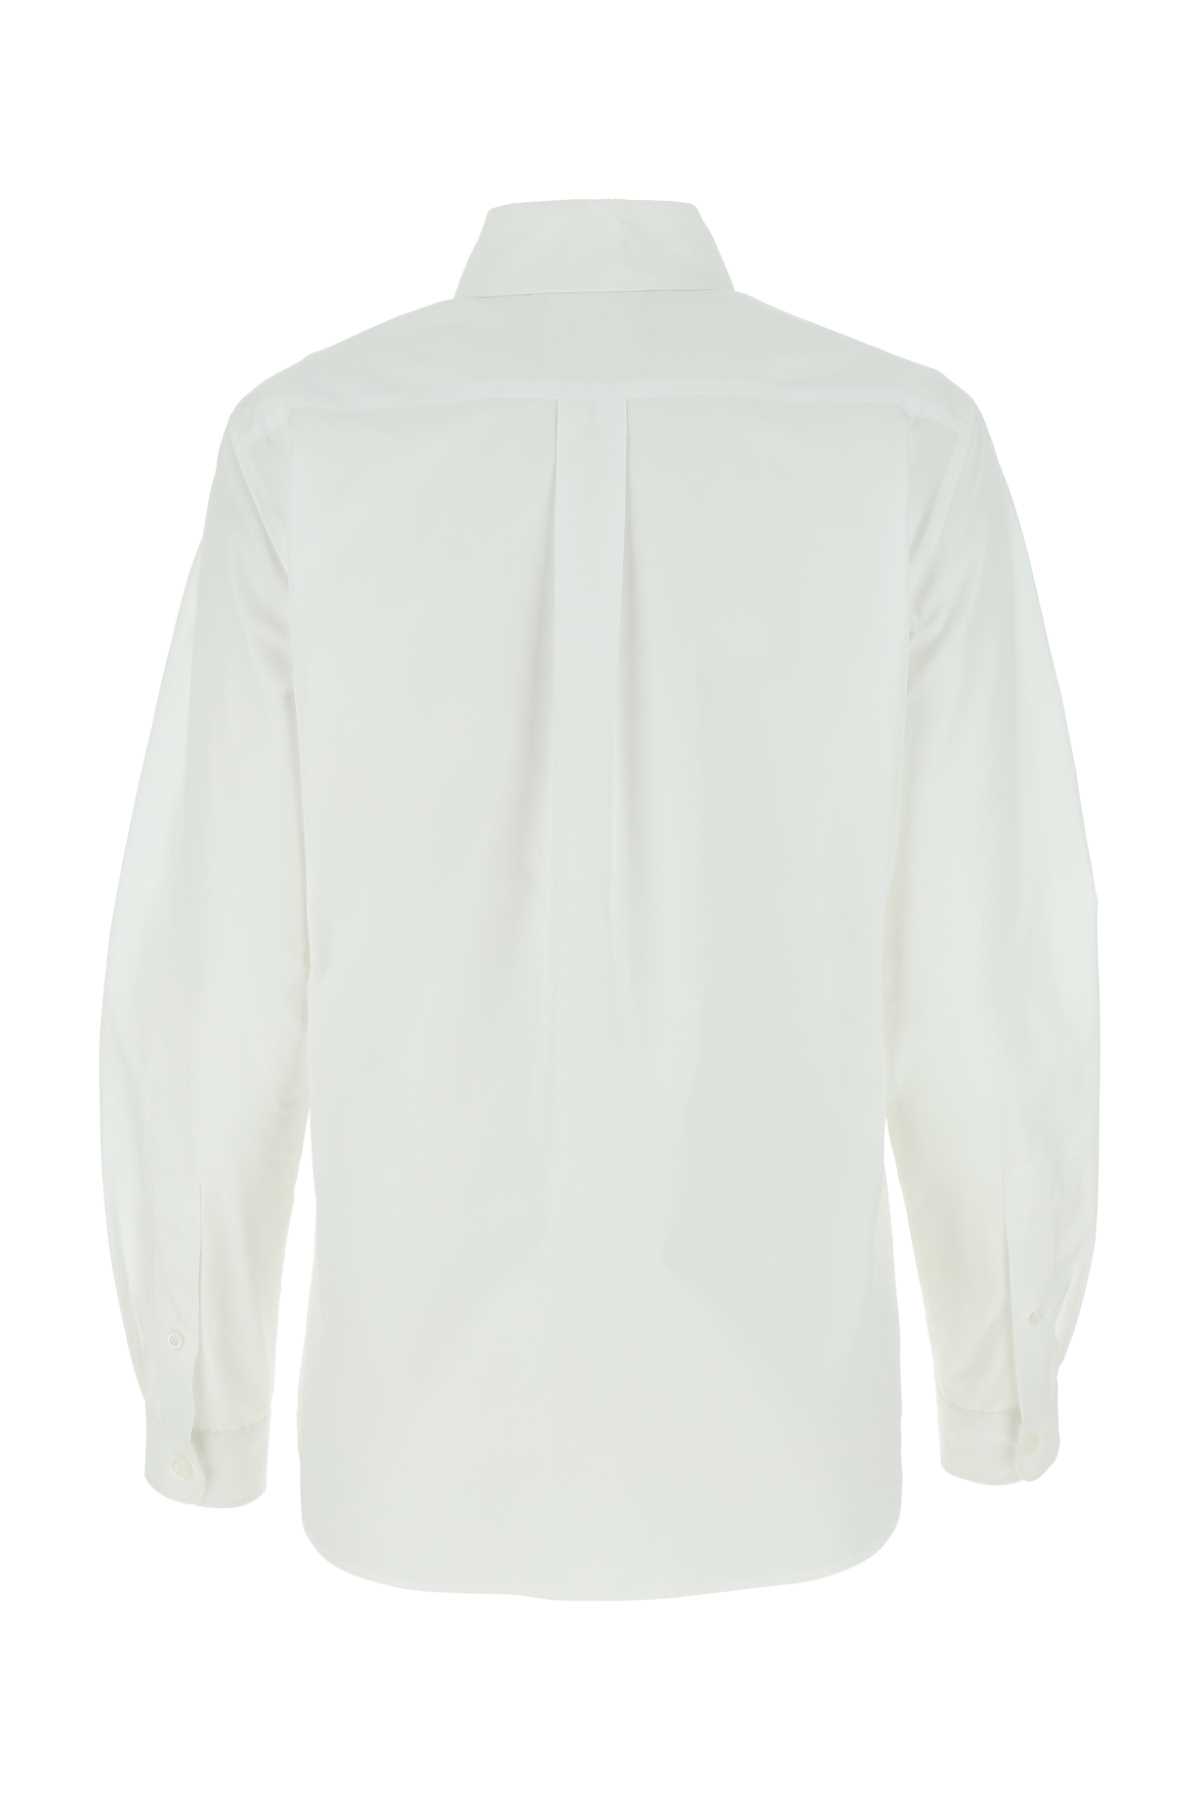 Givenchy White Poplin Shirt In 100